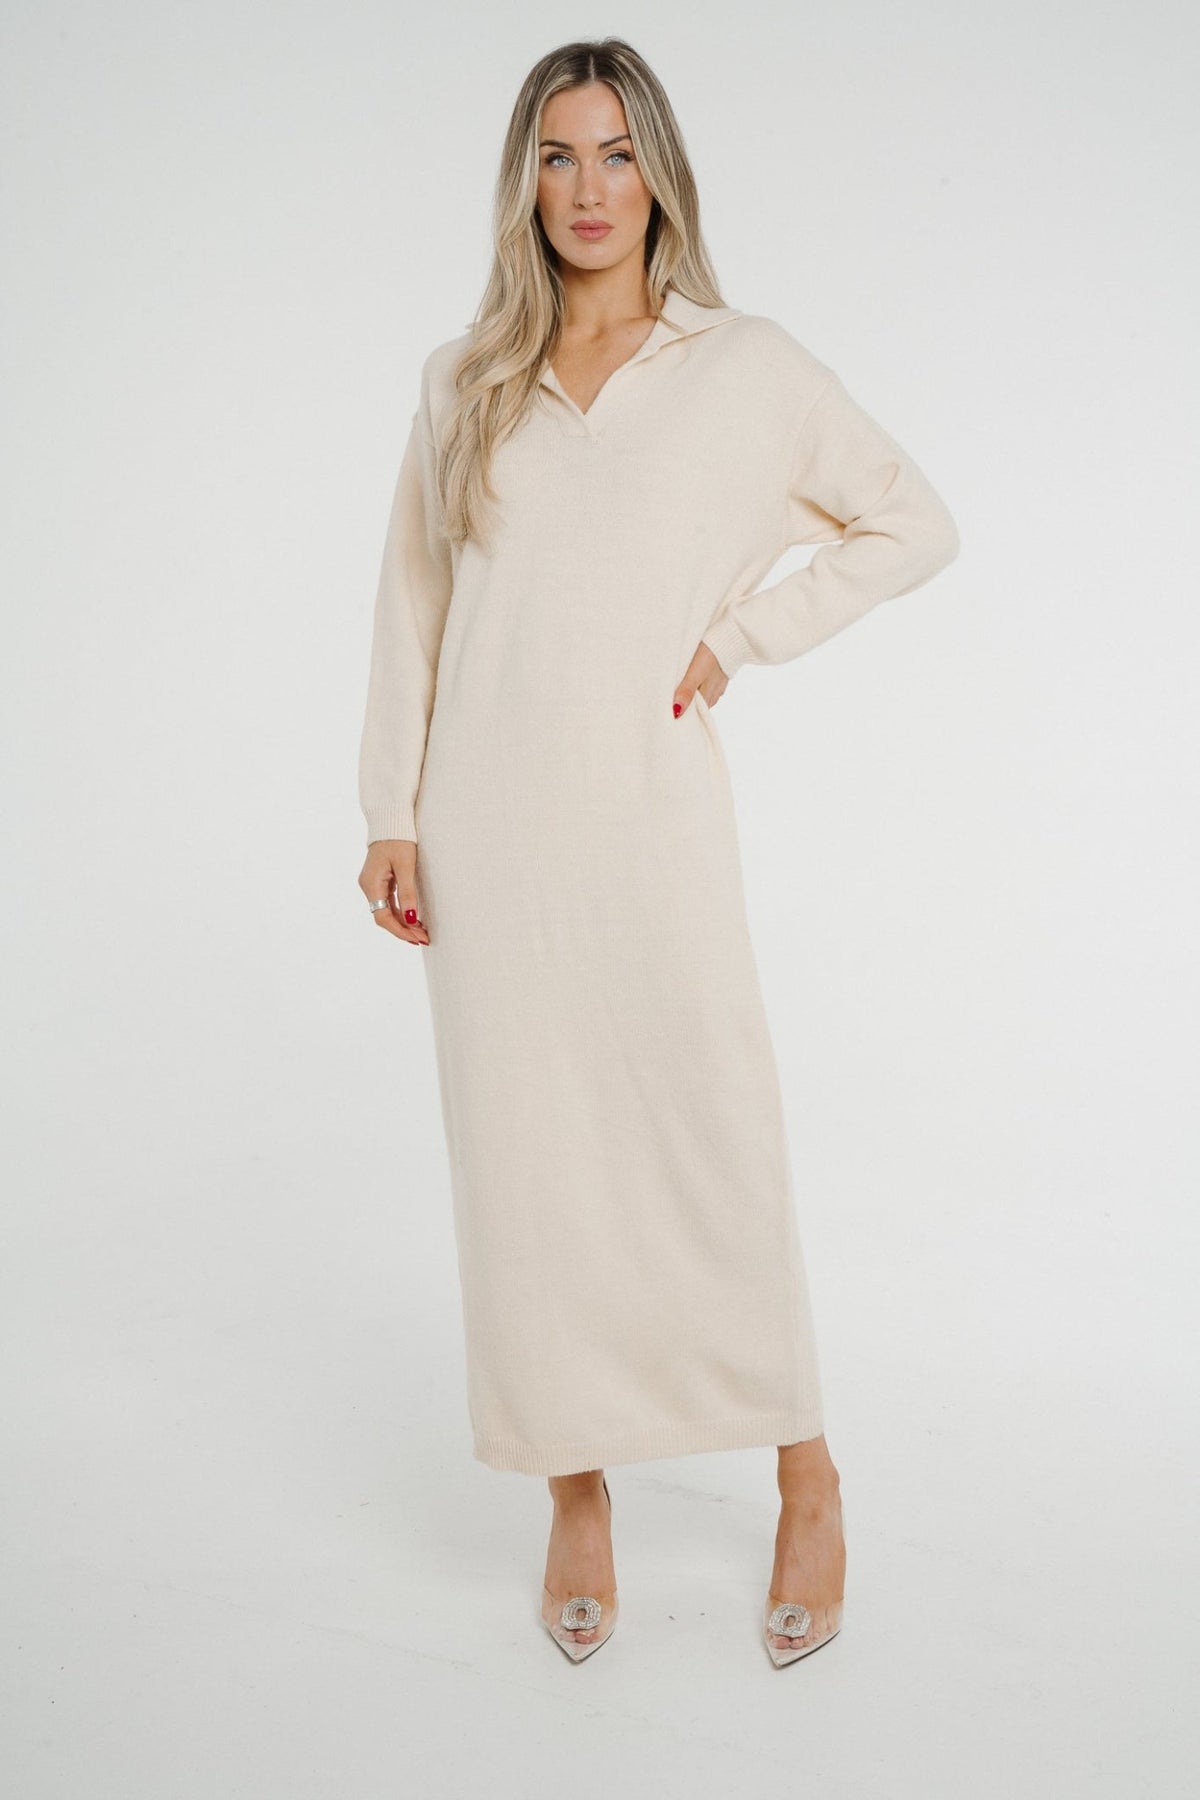 Ivy Knit Midi Dress In Cream - The Walk in Wardrobe